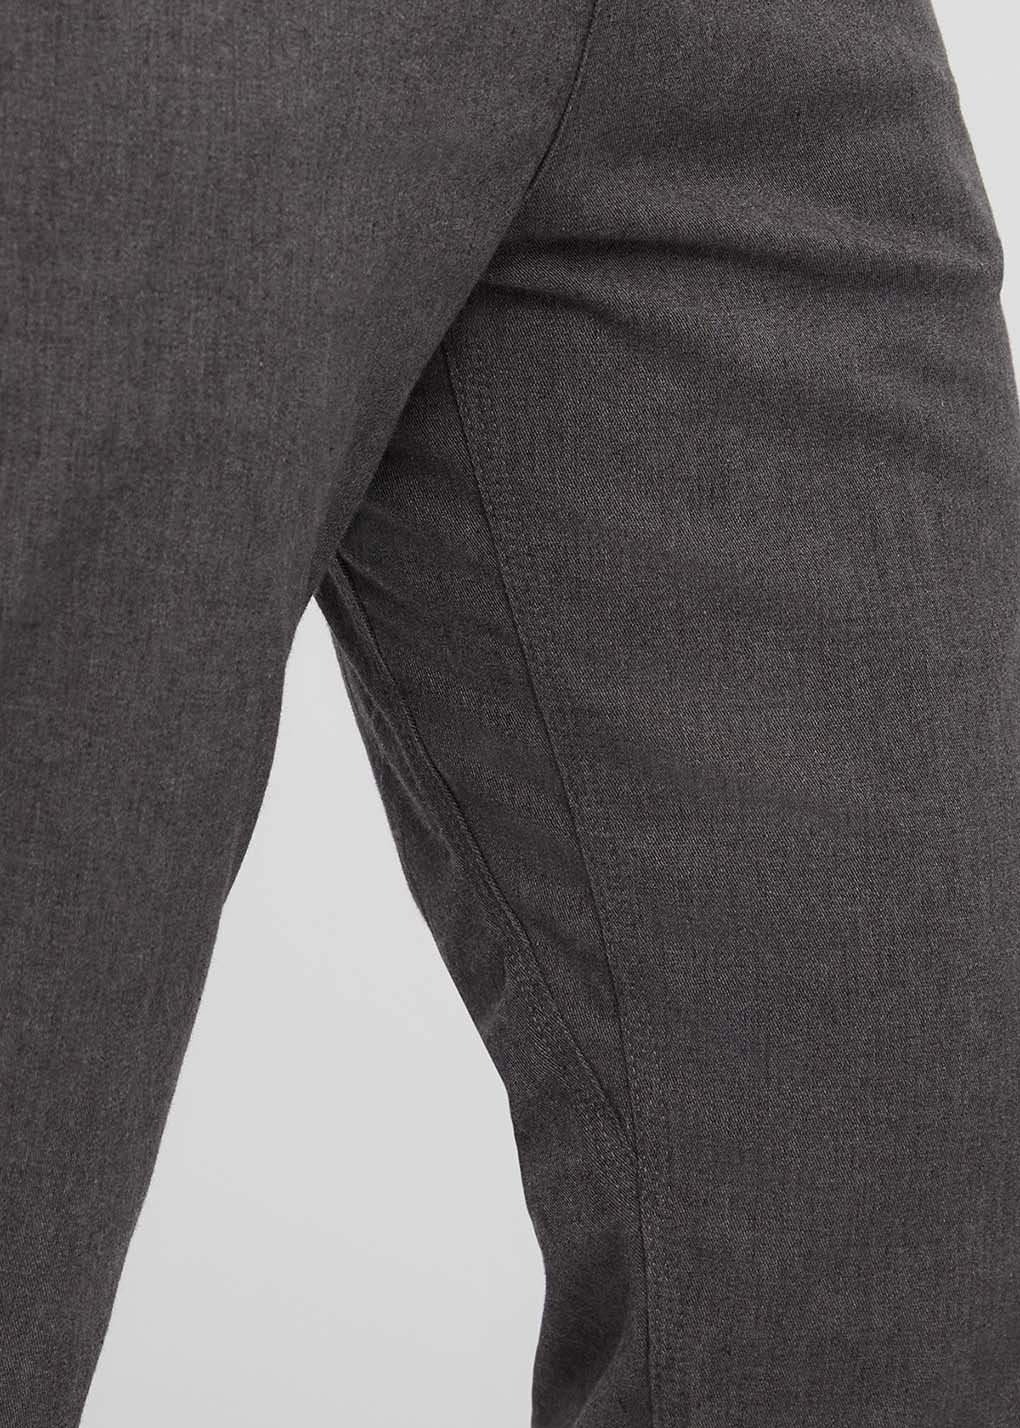 Men's Stretch Chino Trouser